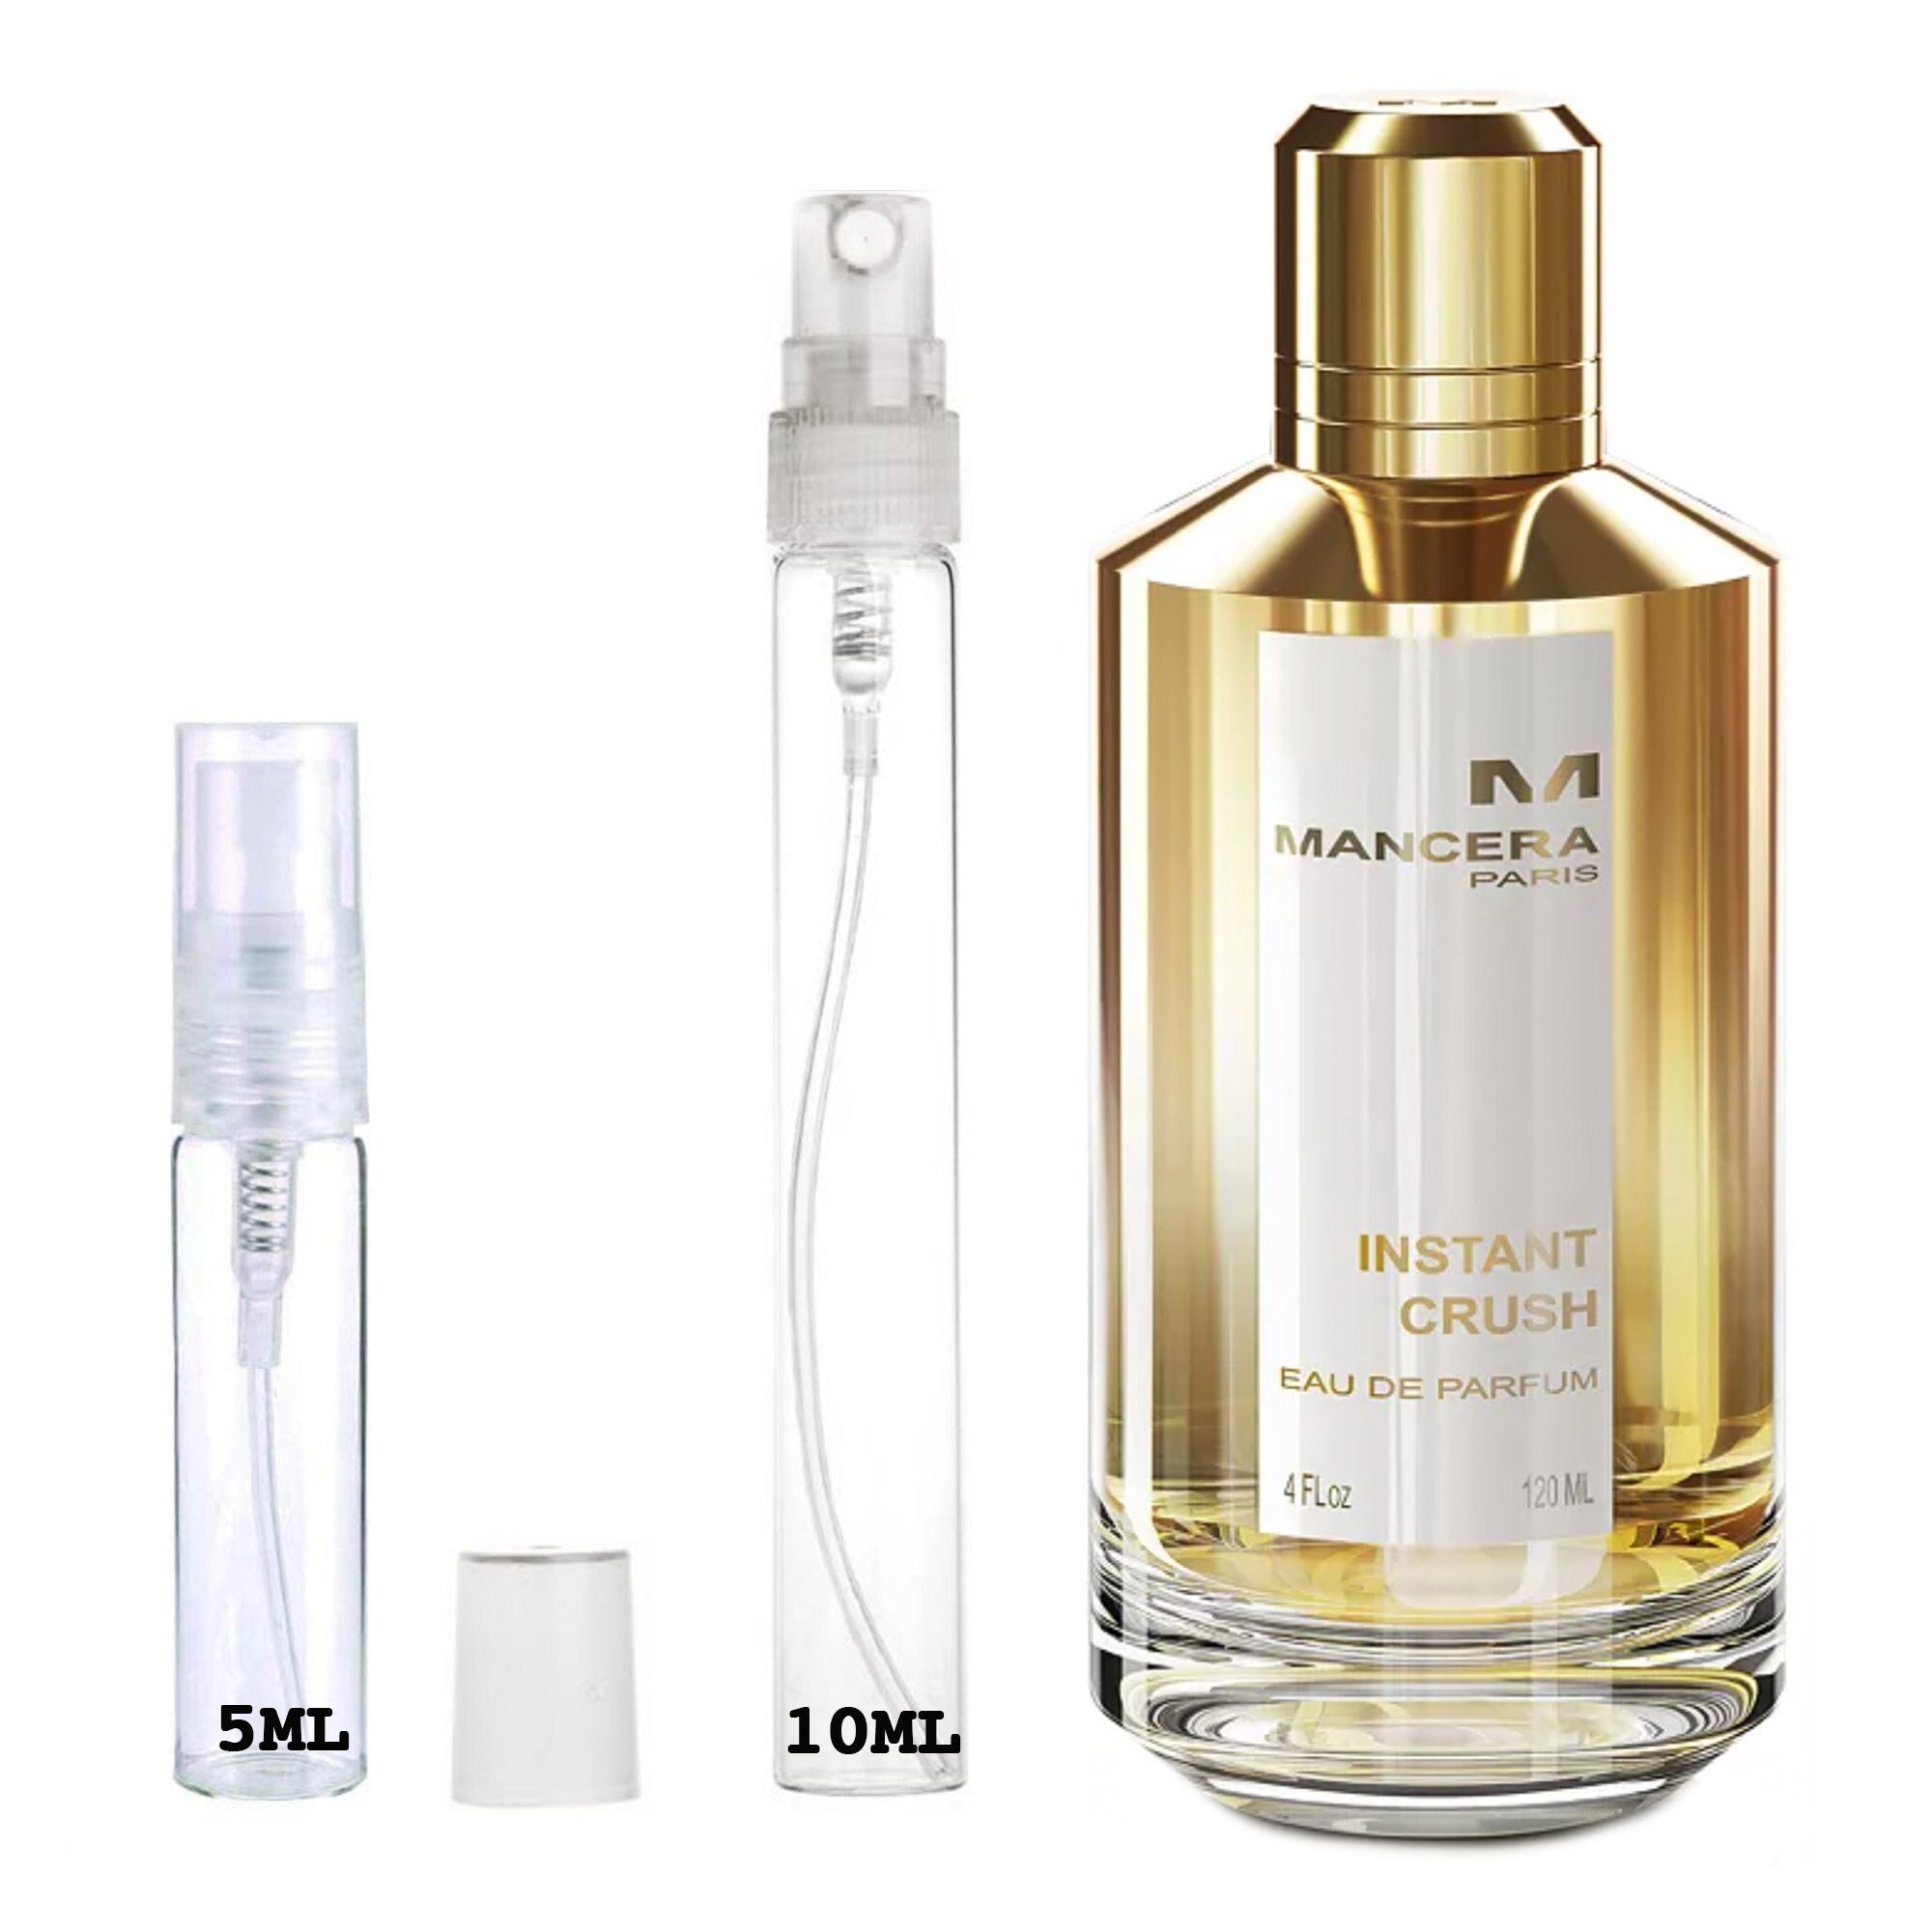 NEW - Perfumes / Testers / Fragrances - Spain, Costa Blanca